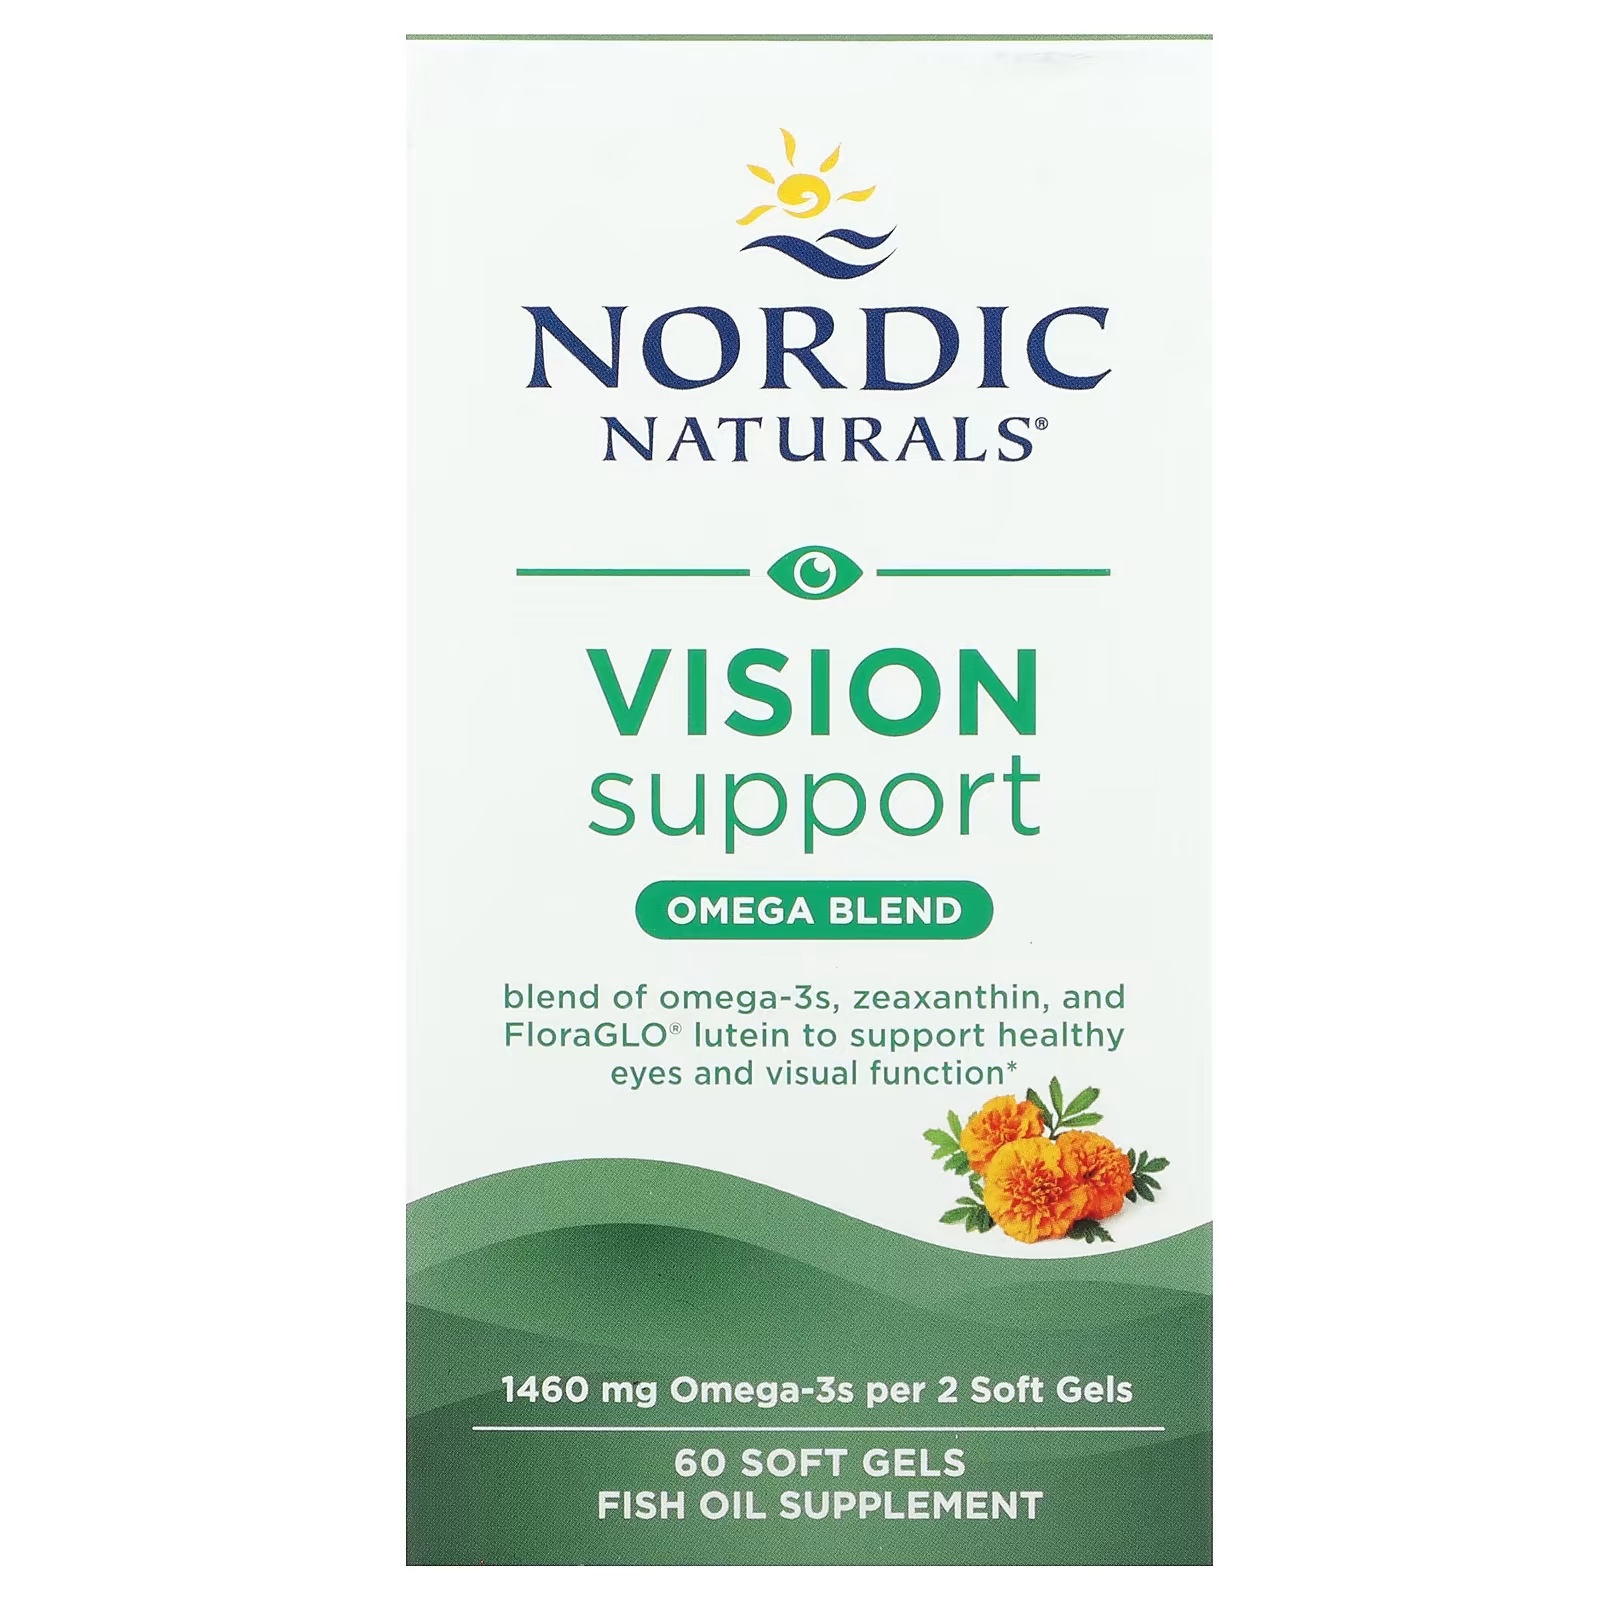 Nordic Naturals Vision Support Omega Blend 1460 мг, 60 мягких таблеток (730 мг на мягкую гель) nordic naturals omega focus 1280 мг 60 мягких таблеток 640 мг на мягкую гель